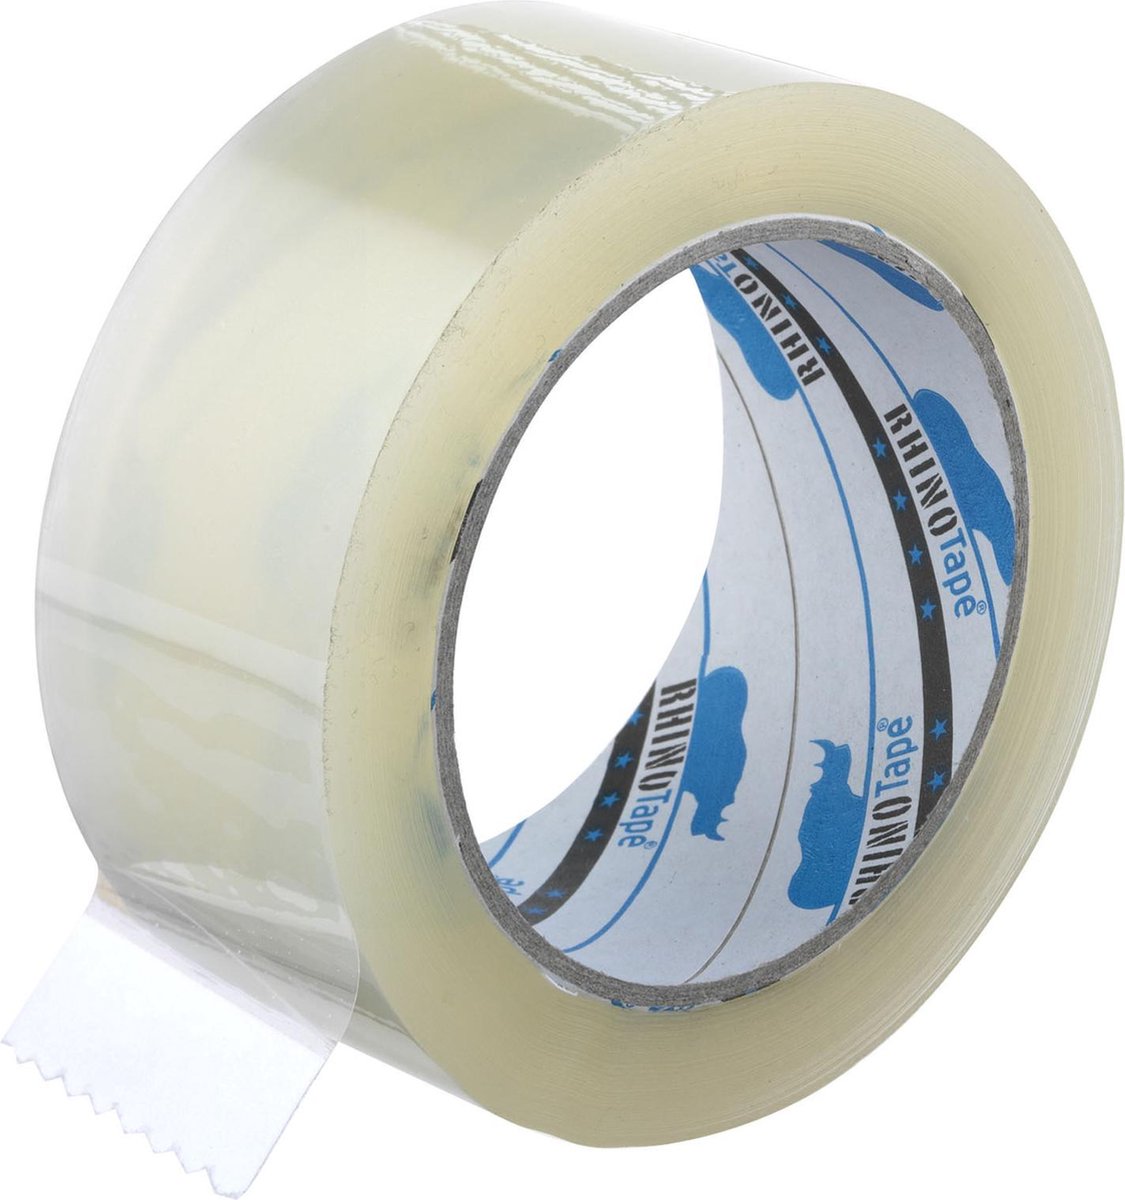 Rhino verpakkingstape transparant 50mm x 66 mtr - extra kleefkracht - 6 rollen per verpakking - Rhino tape